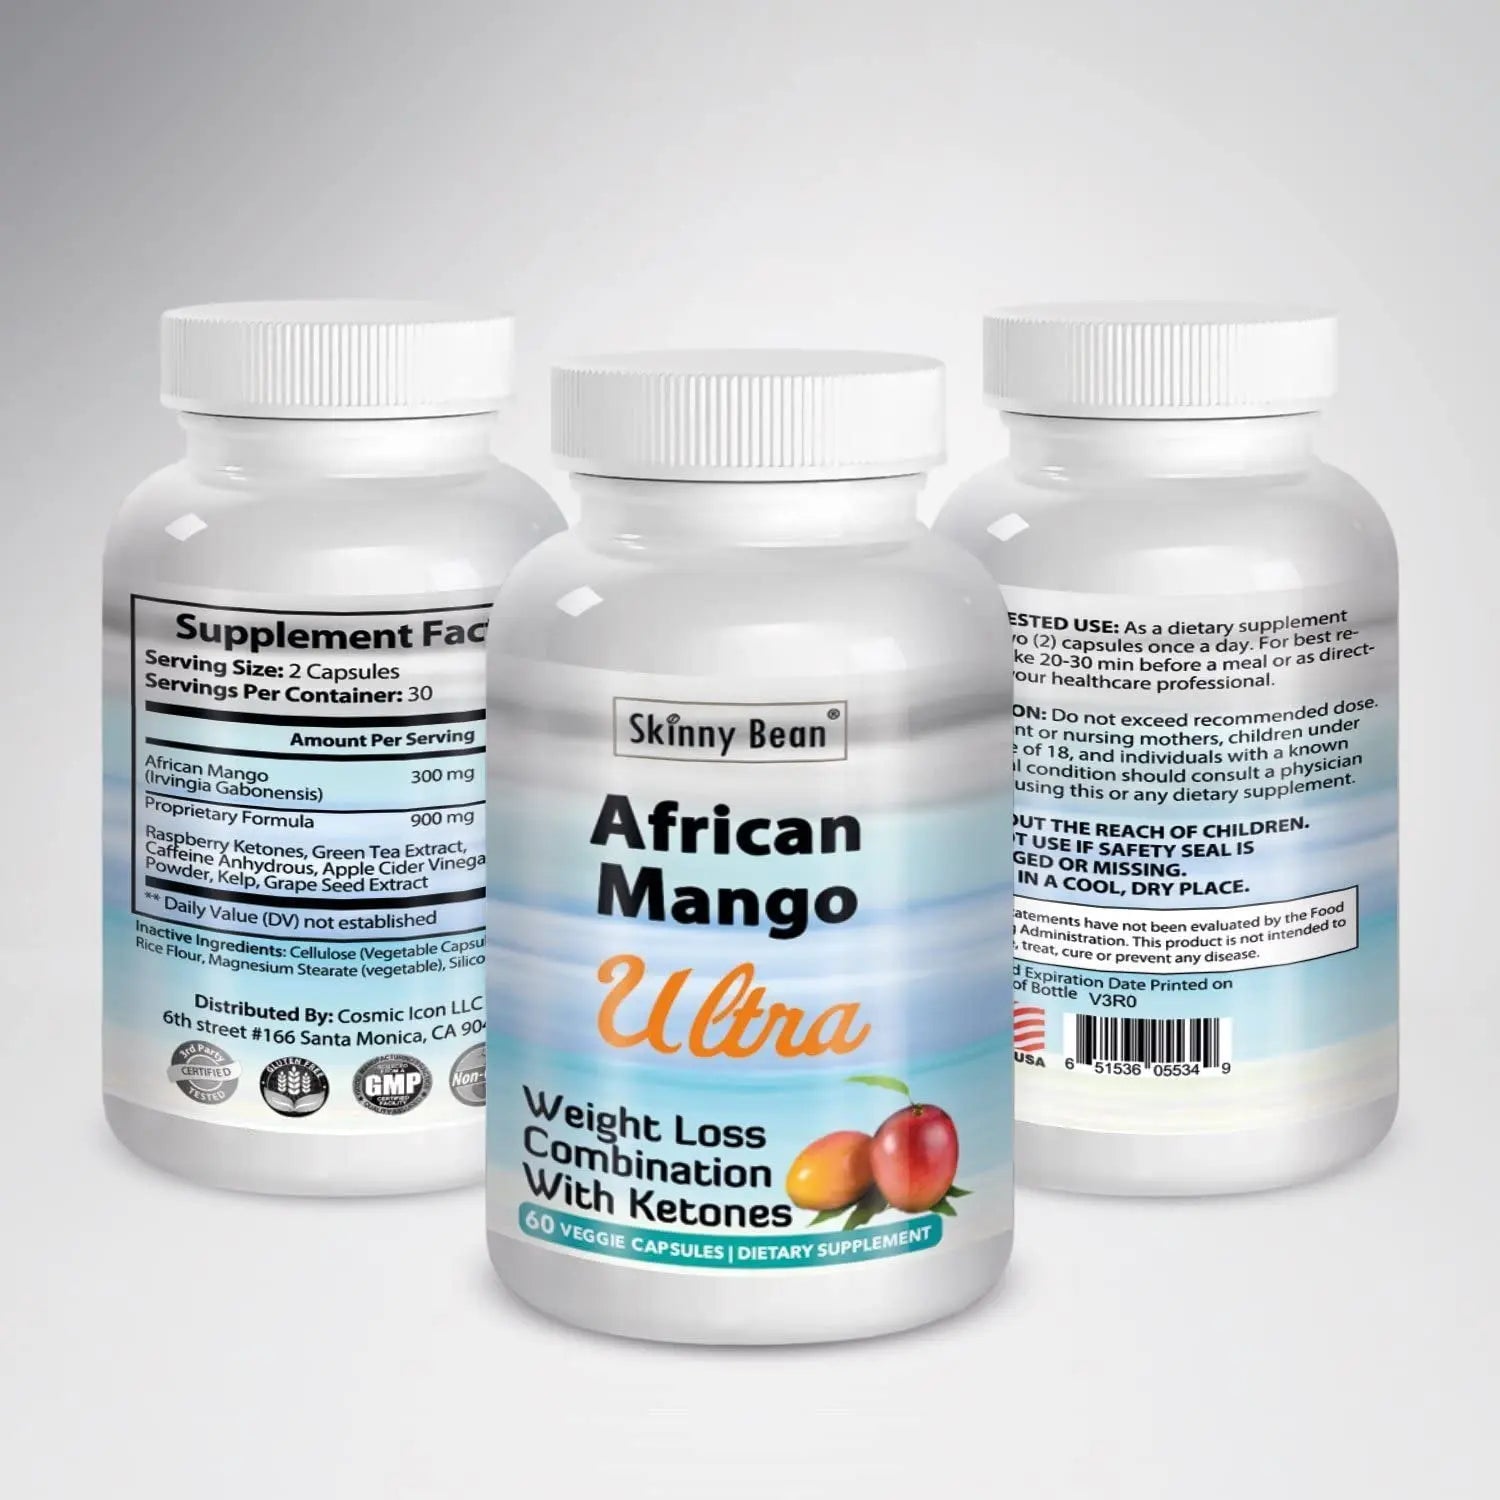 Skinny Bean® African Mango supplement keto stack Stack Skinny Bean